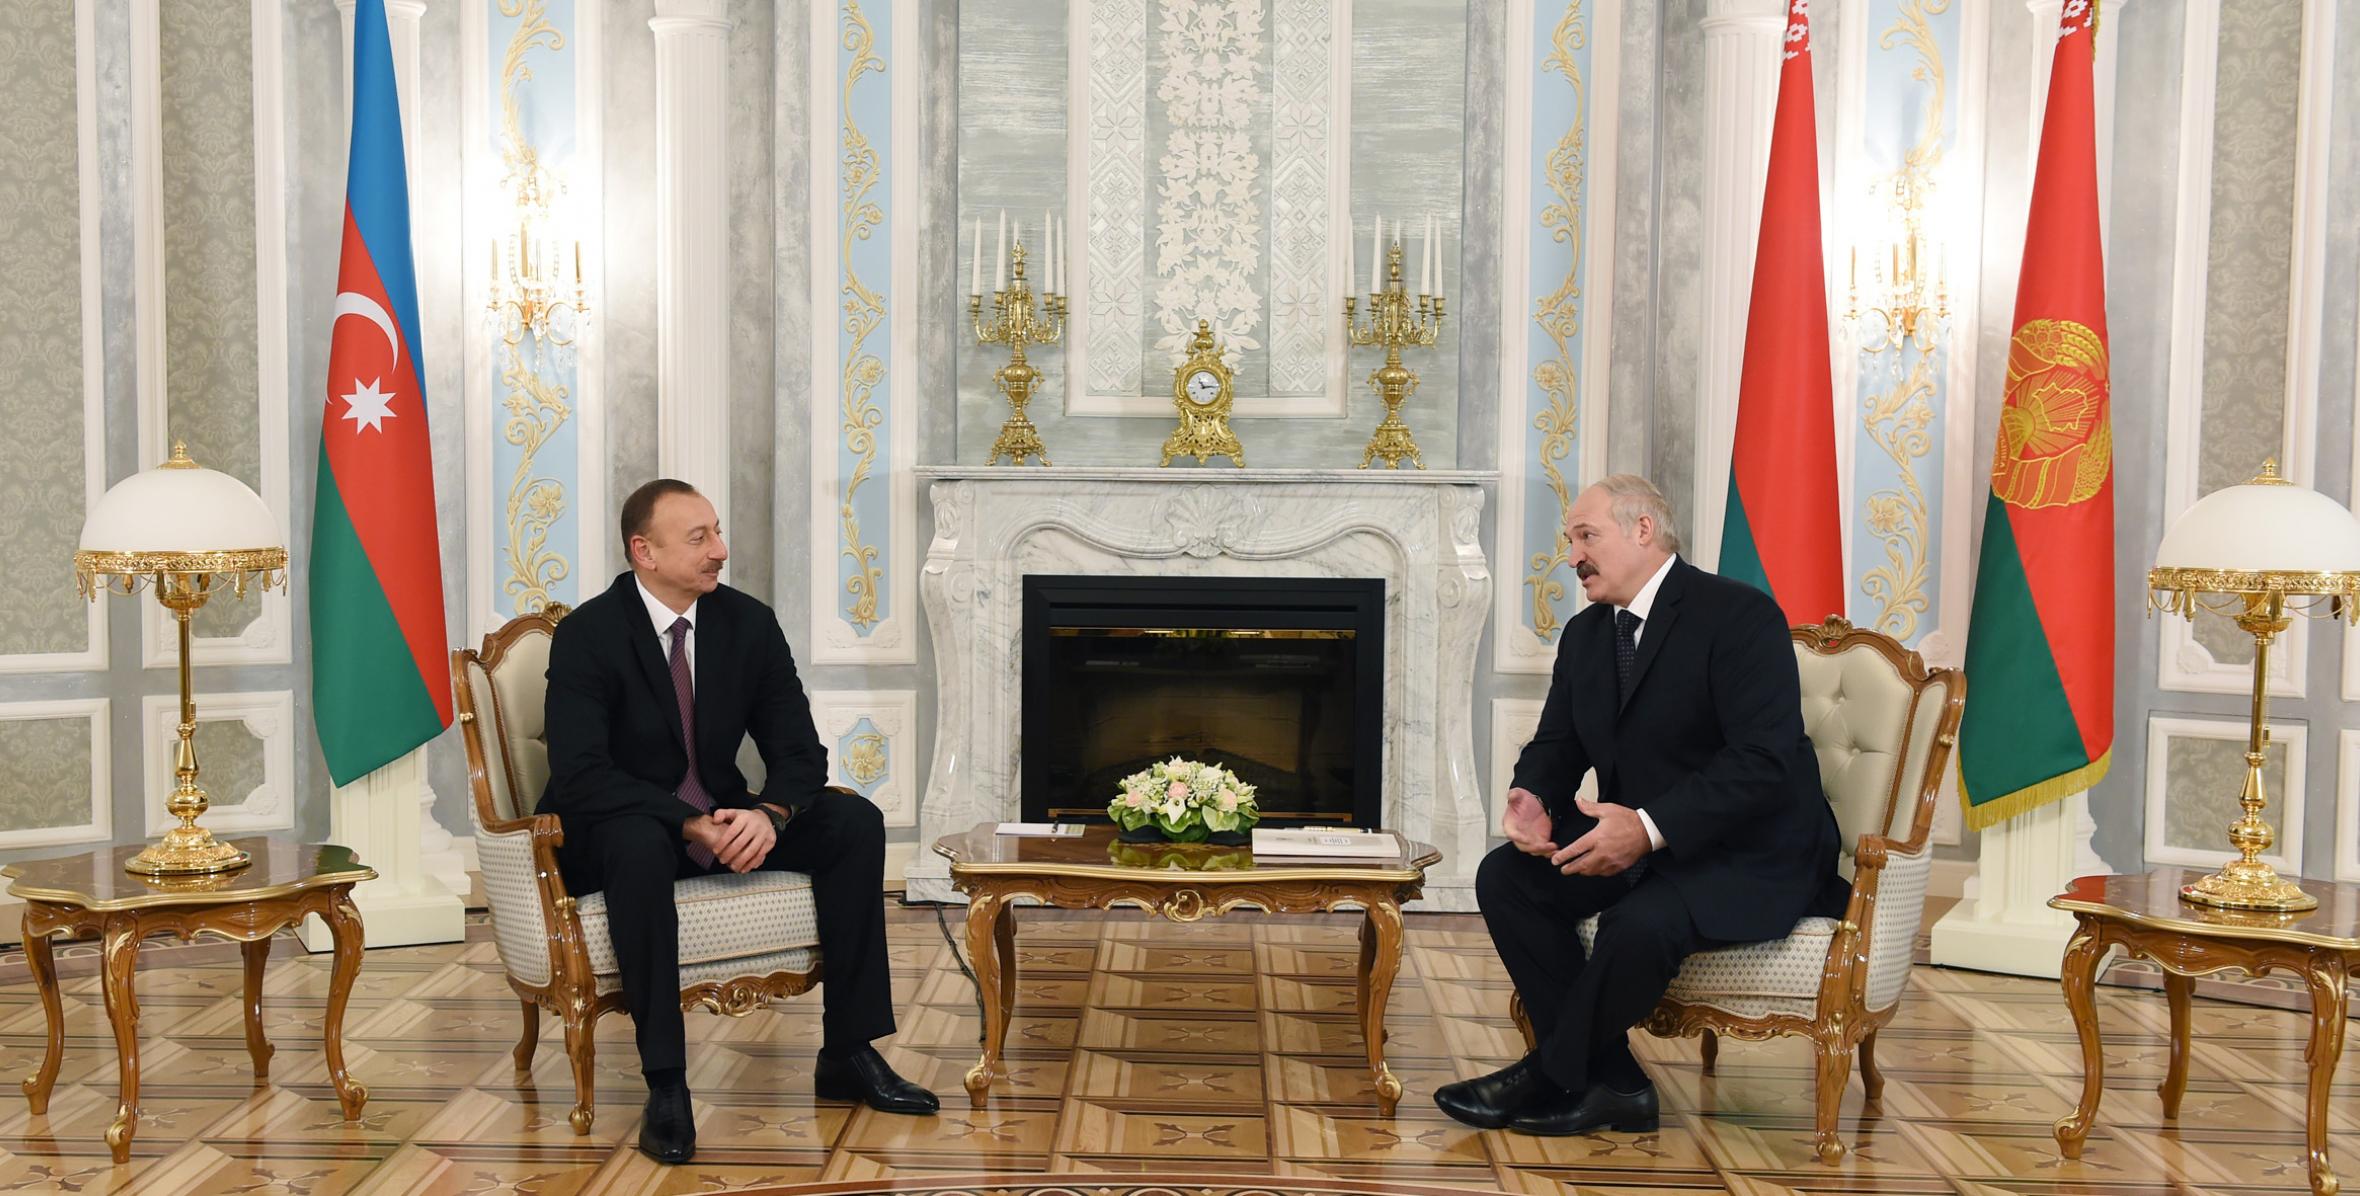 Ilham Aliyev and President of Belarus Alexander Lukashenko held a one-on-one meeting